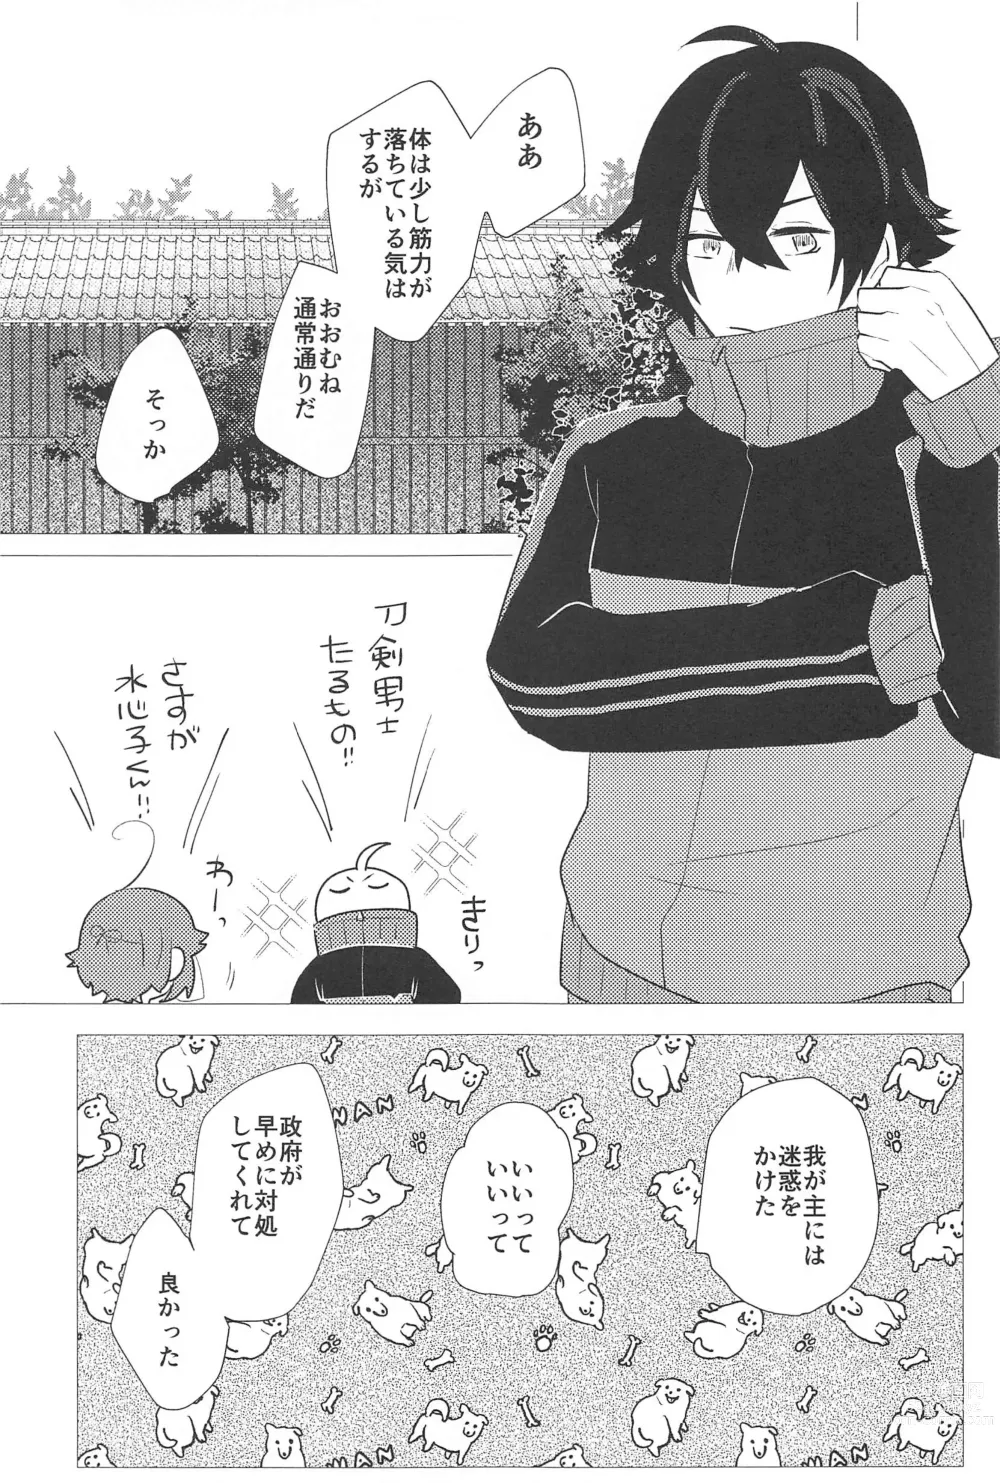 Page 32 of doujinshi Konnanotte Nai!